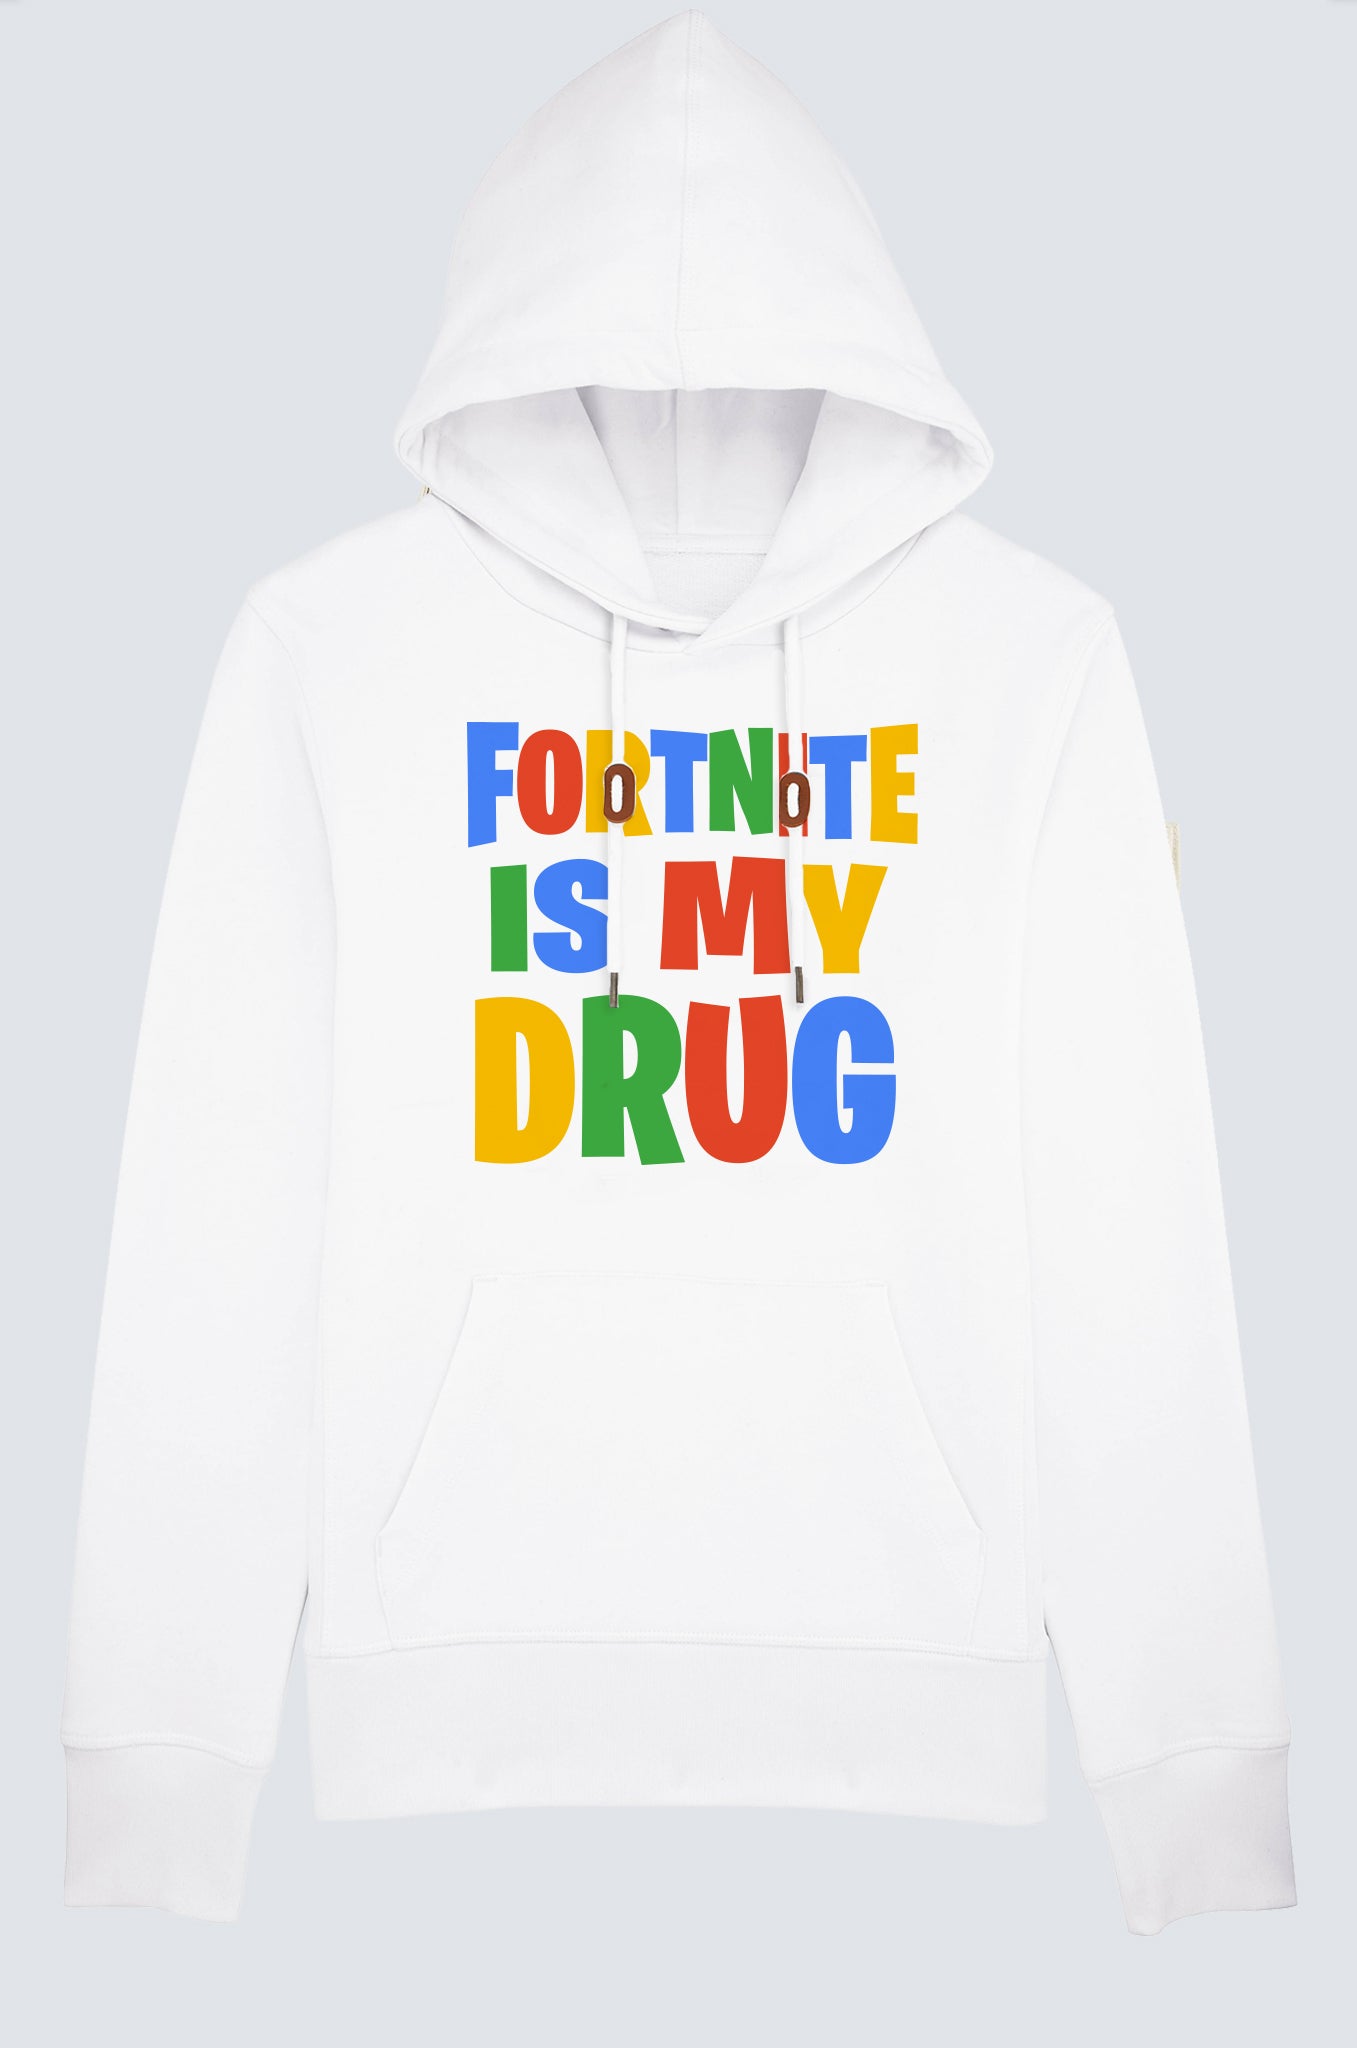 Fortnite is my drug